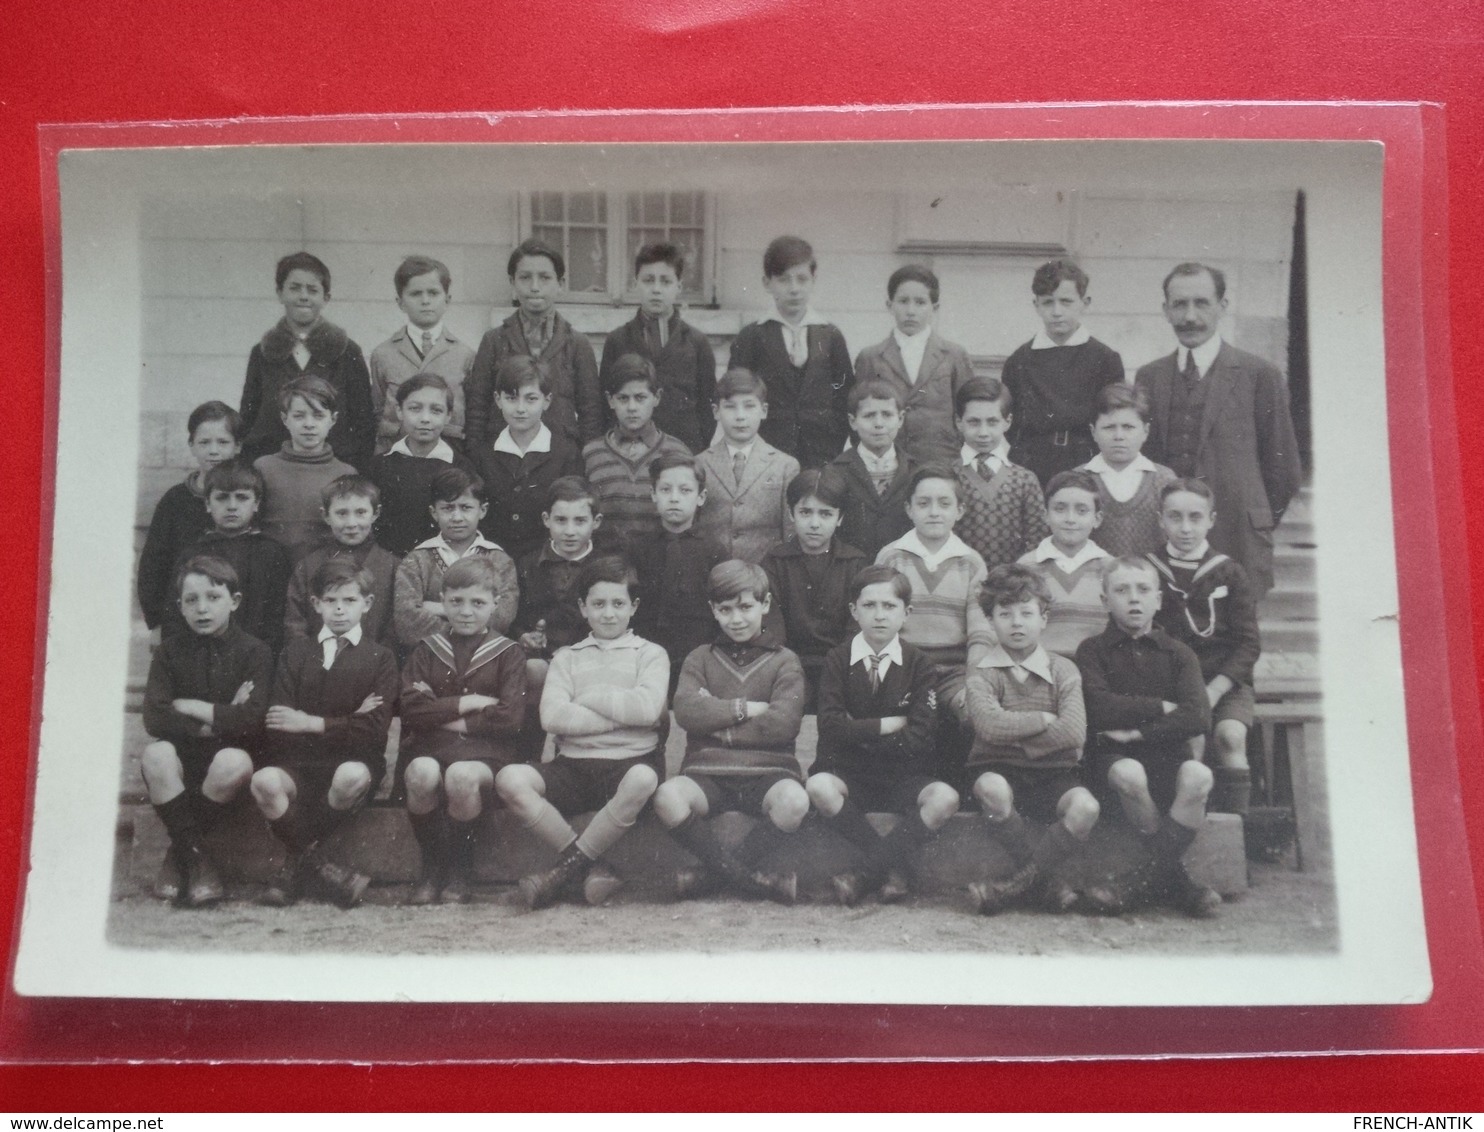 CARTE PHOTO CLASSE ECOLE 1925 1926 - Schools